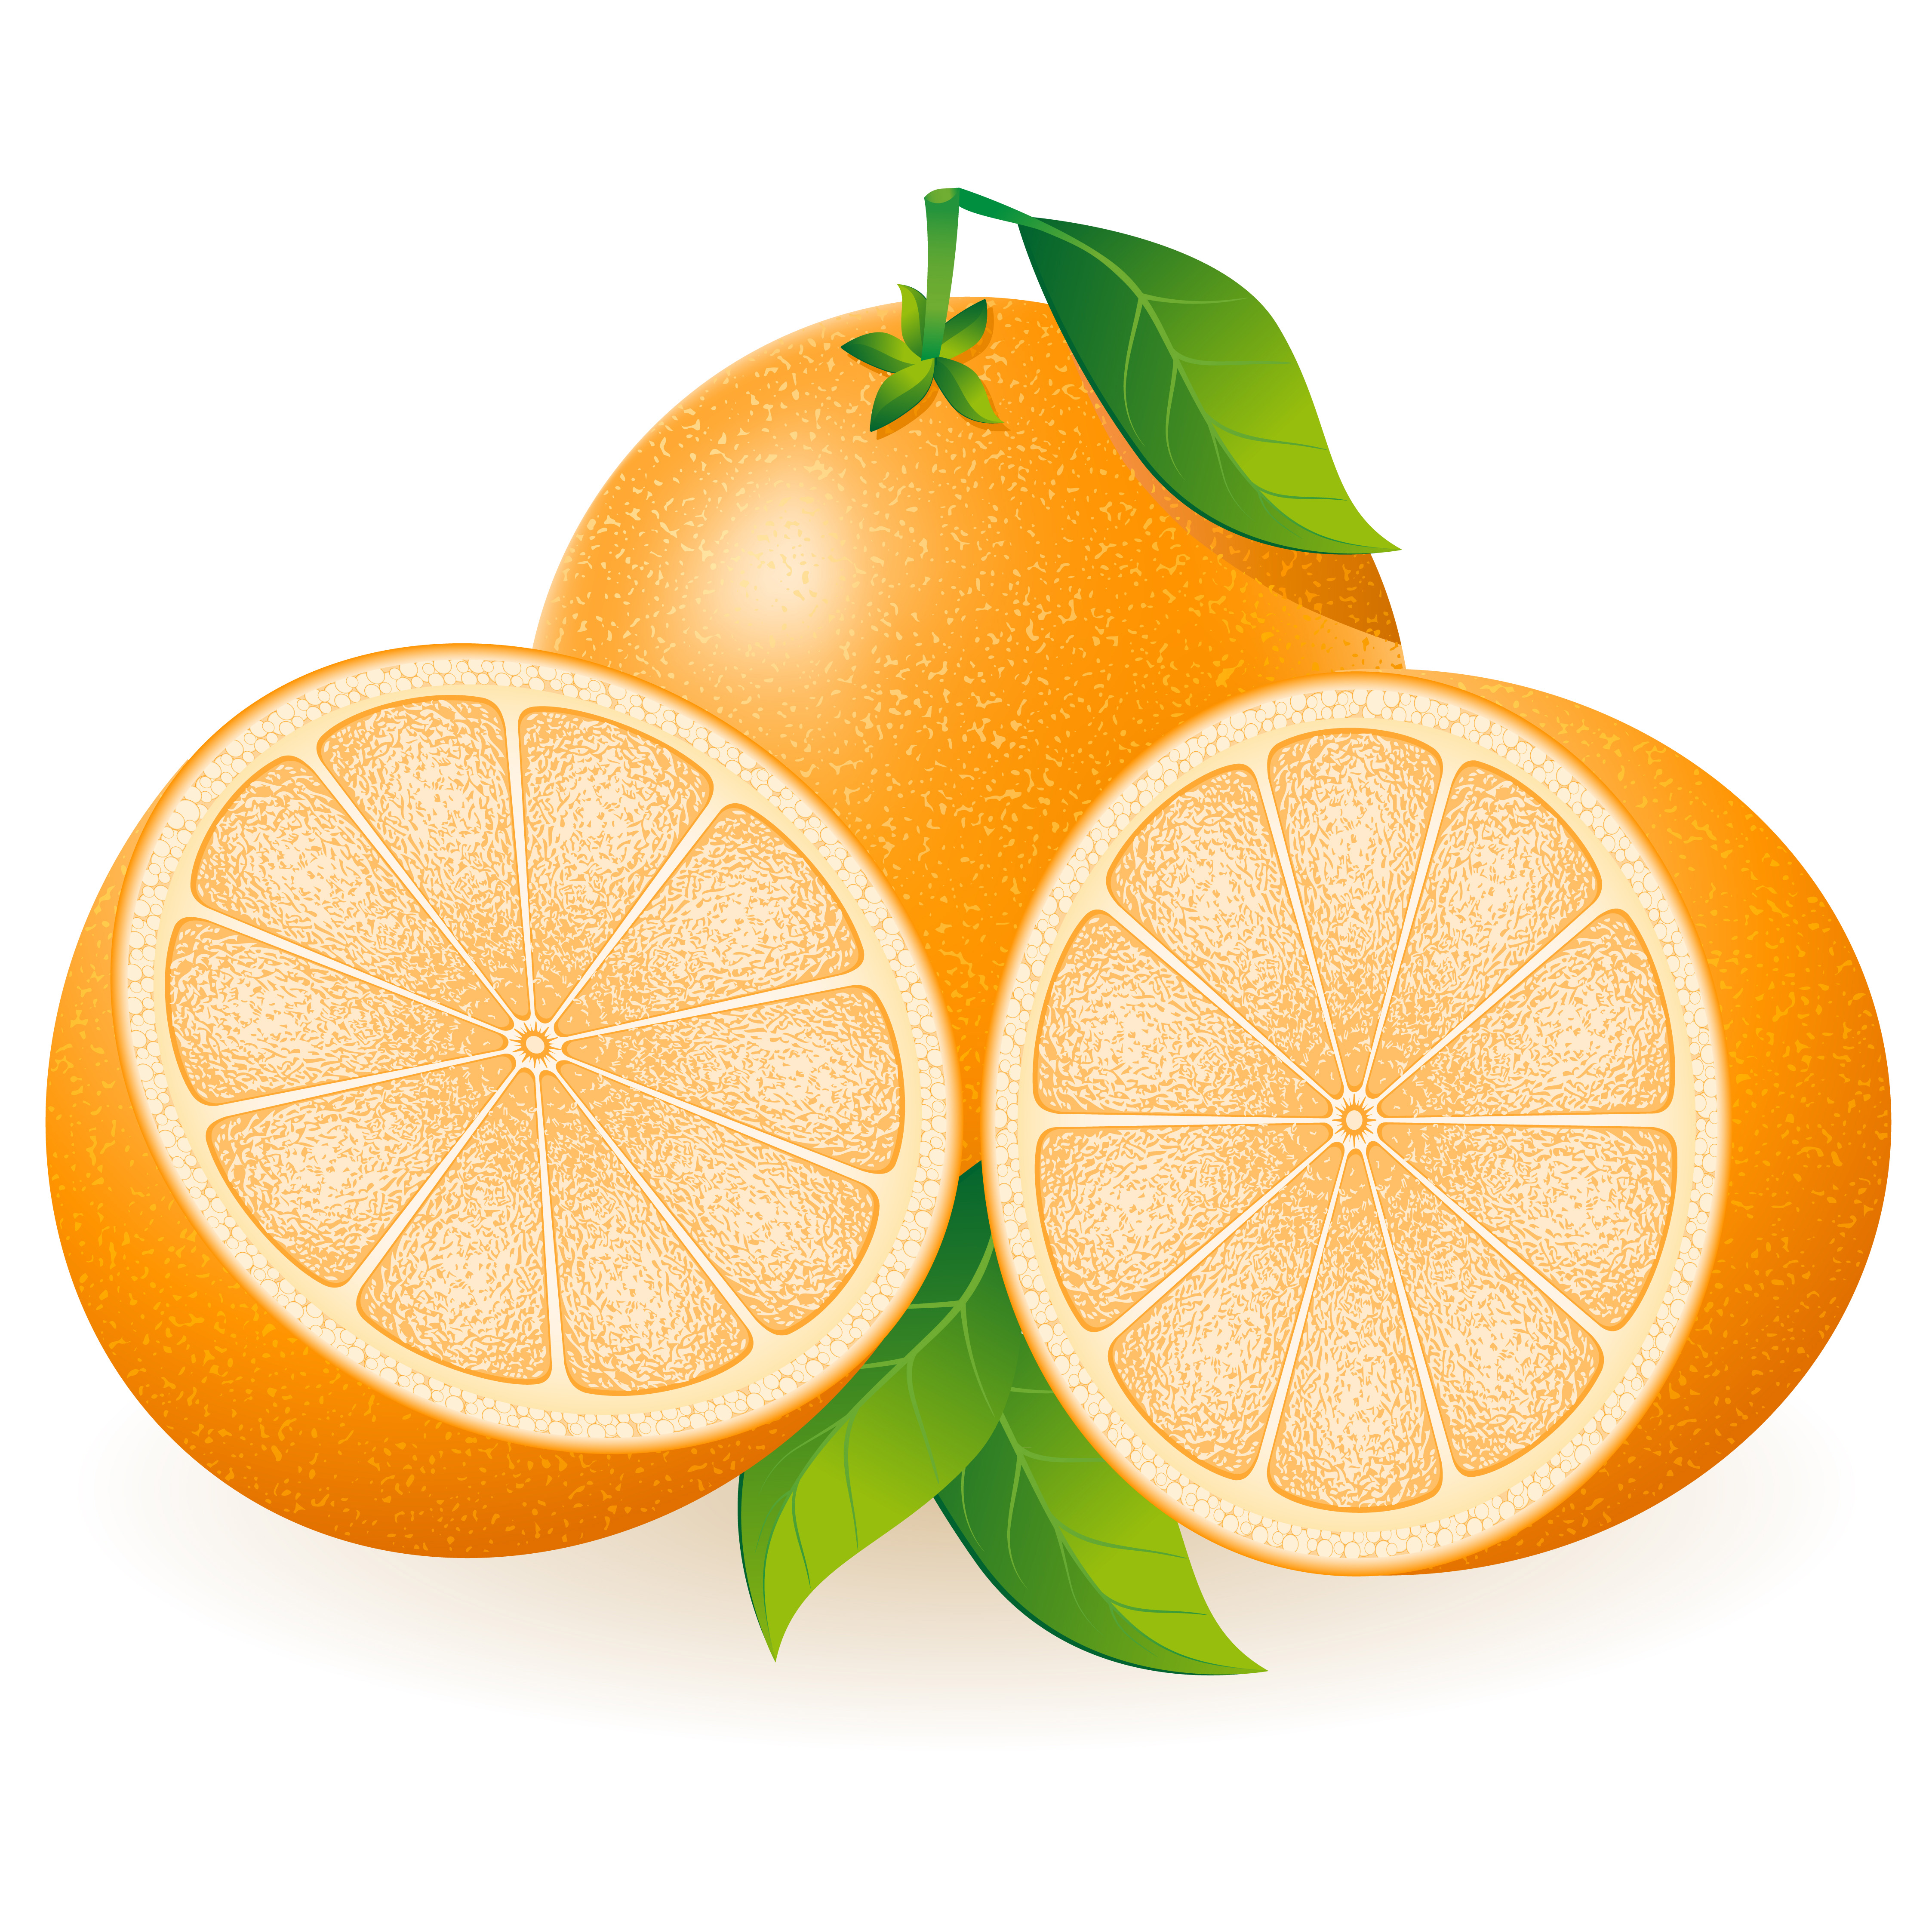  orange  vector  illustration Download Free Vectors  